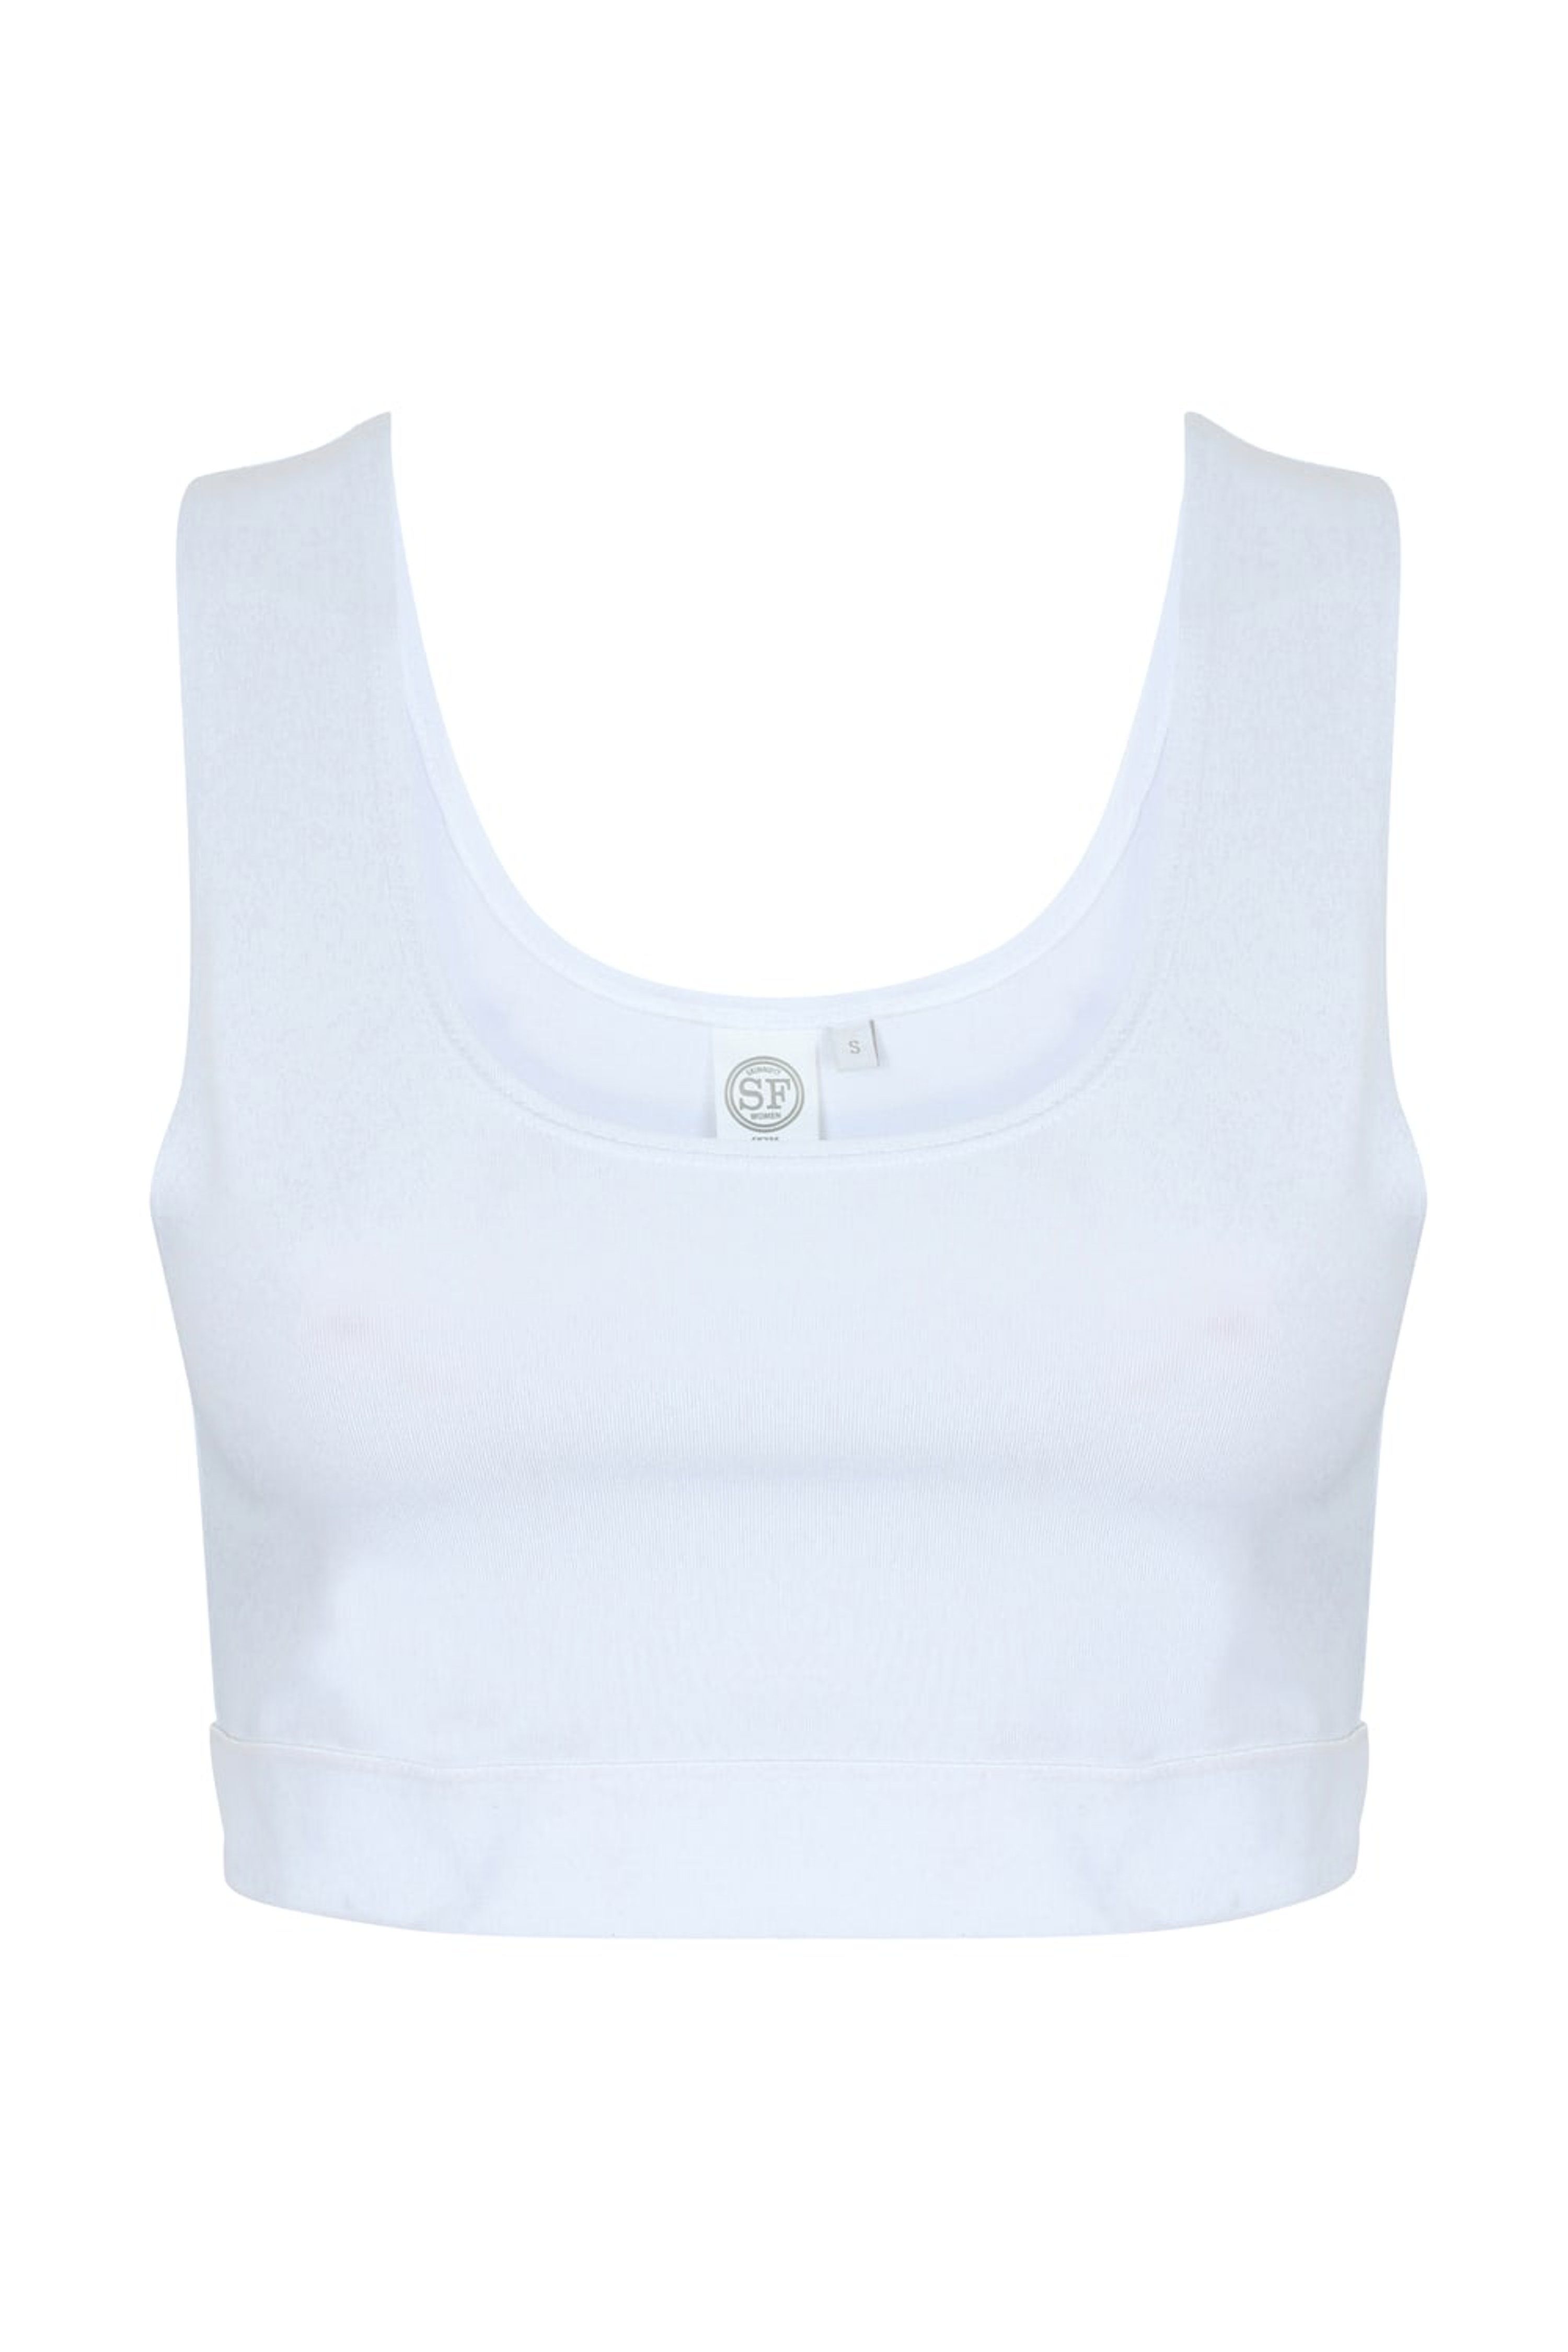 Skinni Fit Womens/Ladies Fashion Crop Top (White/White) - XS - Also in: L, M, S | Verishop